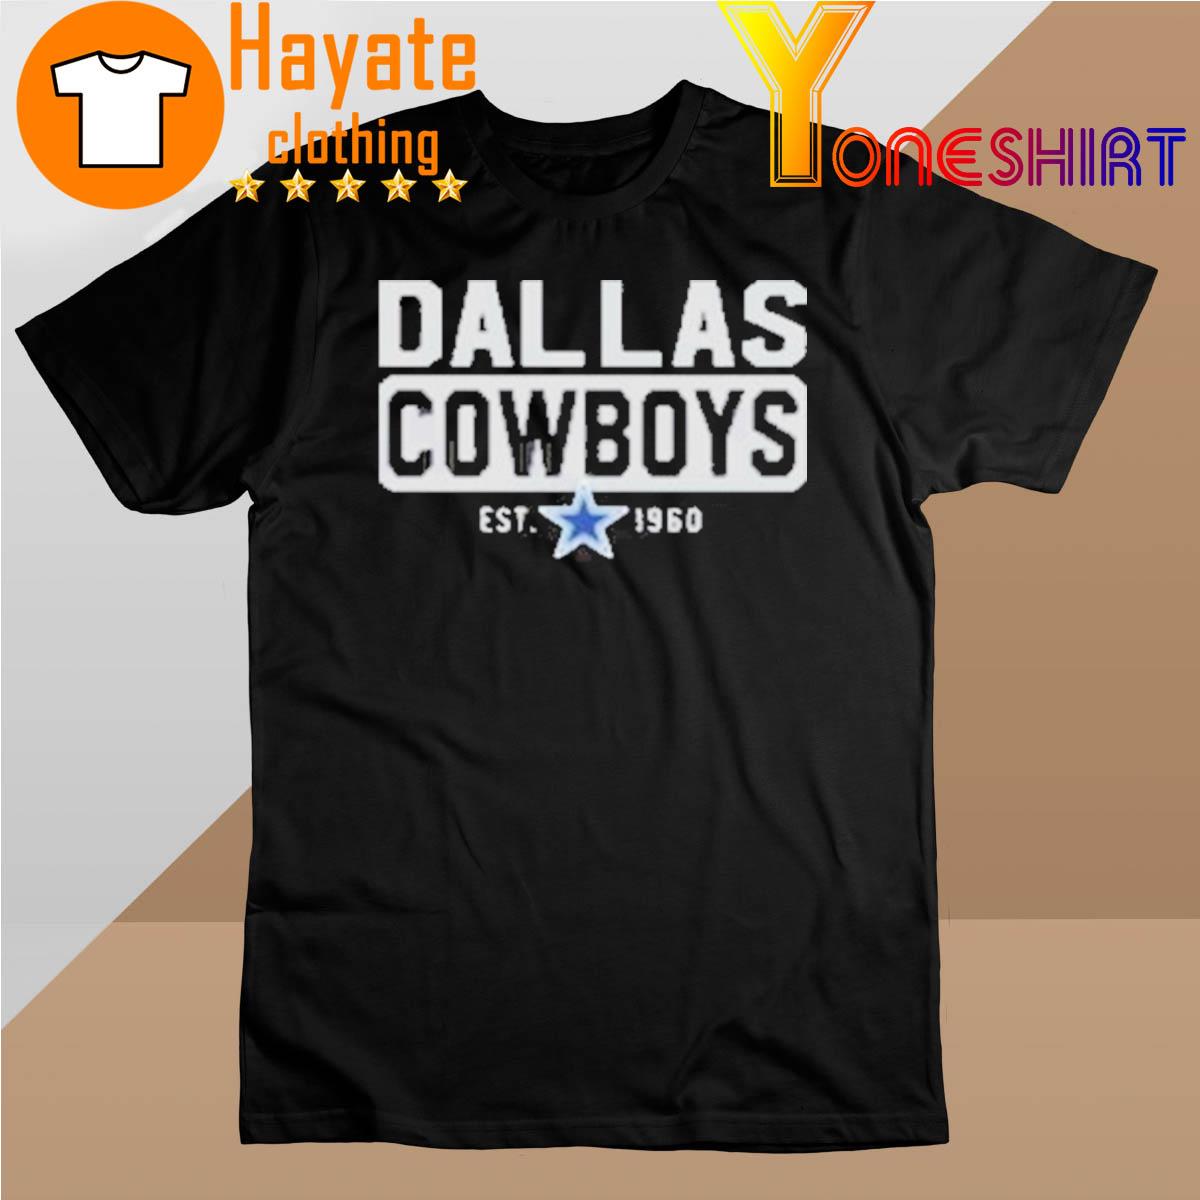 Academy ’47 Dallas Cowboys Box Out 1960 shirt